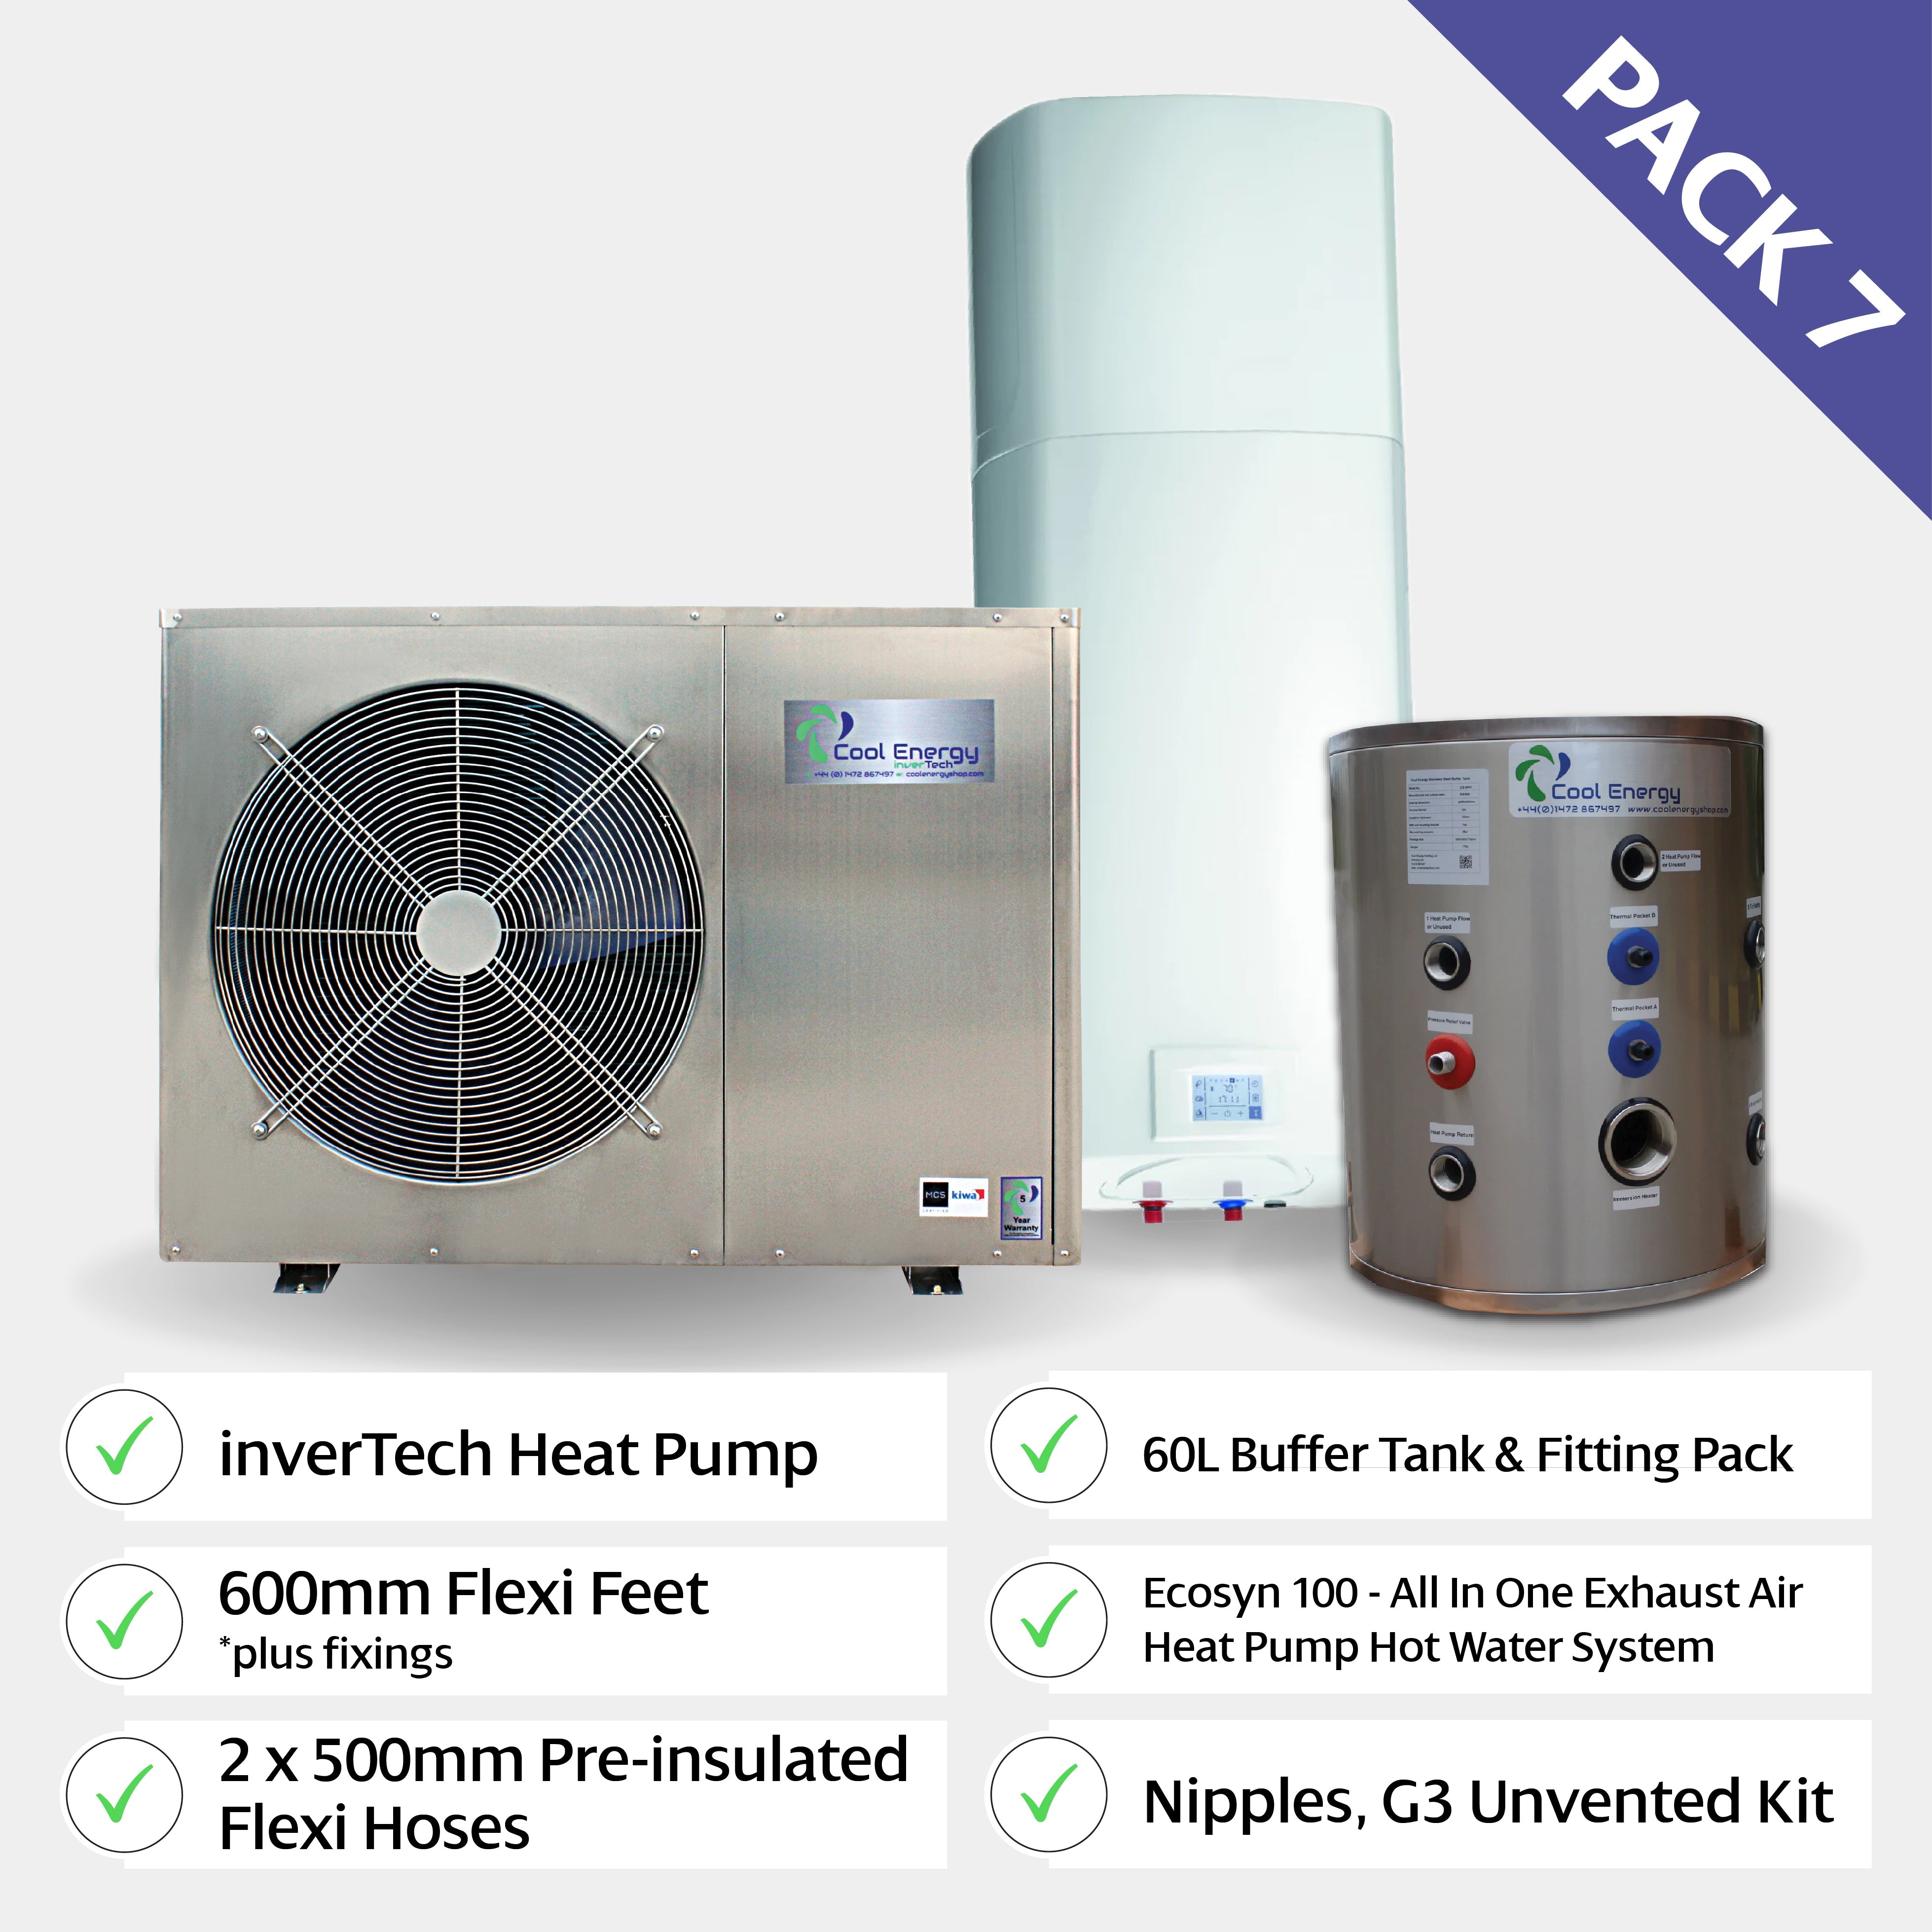 Cool Energy inverTech Heat Pump Package (Pack 7) - Heat Pump Packages - Cool Energy Shop